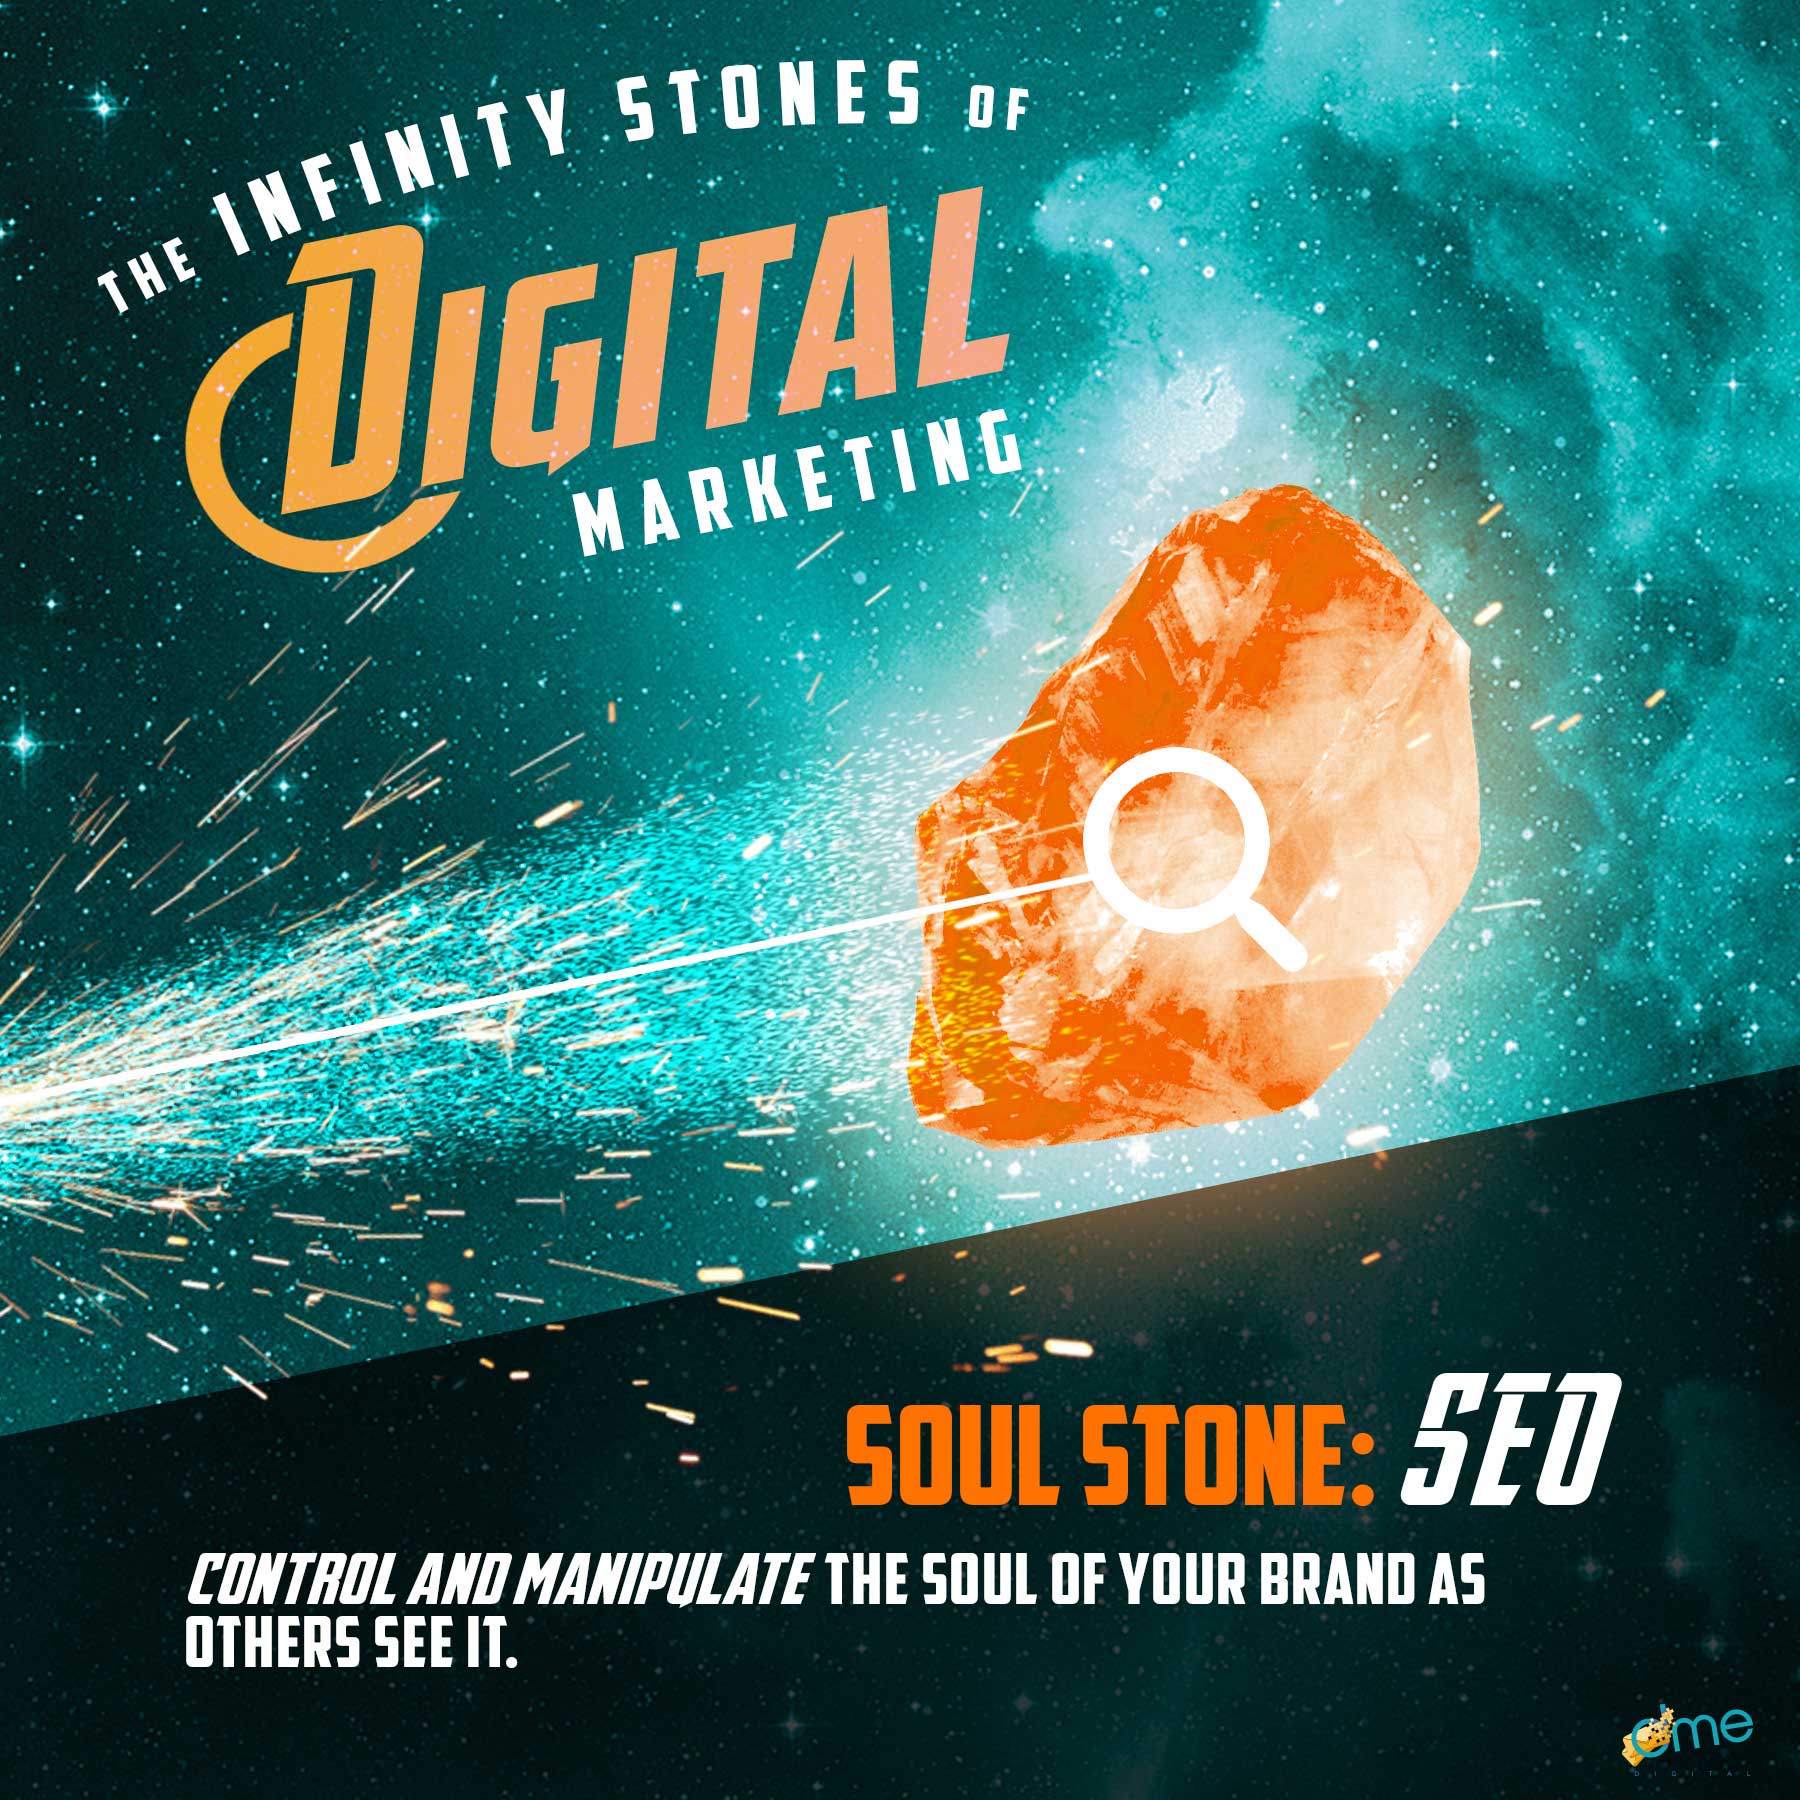 The soul stone of digital marketing is SEO.